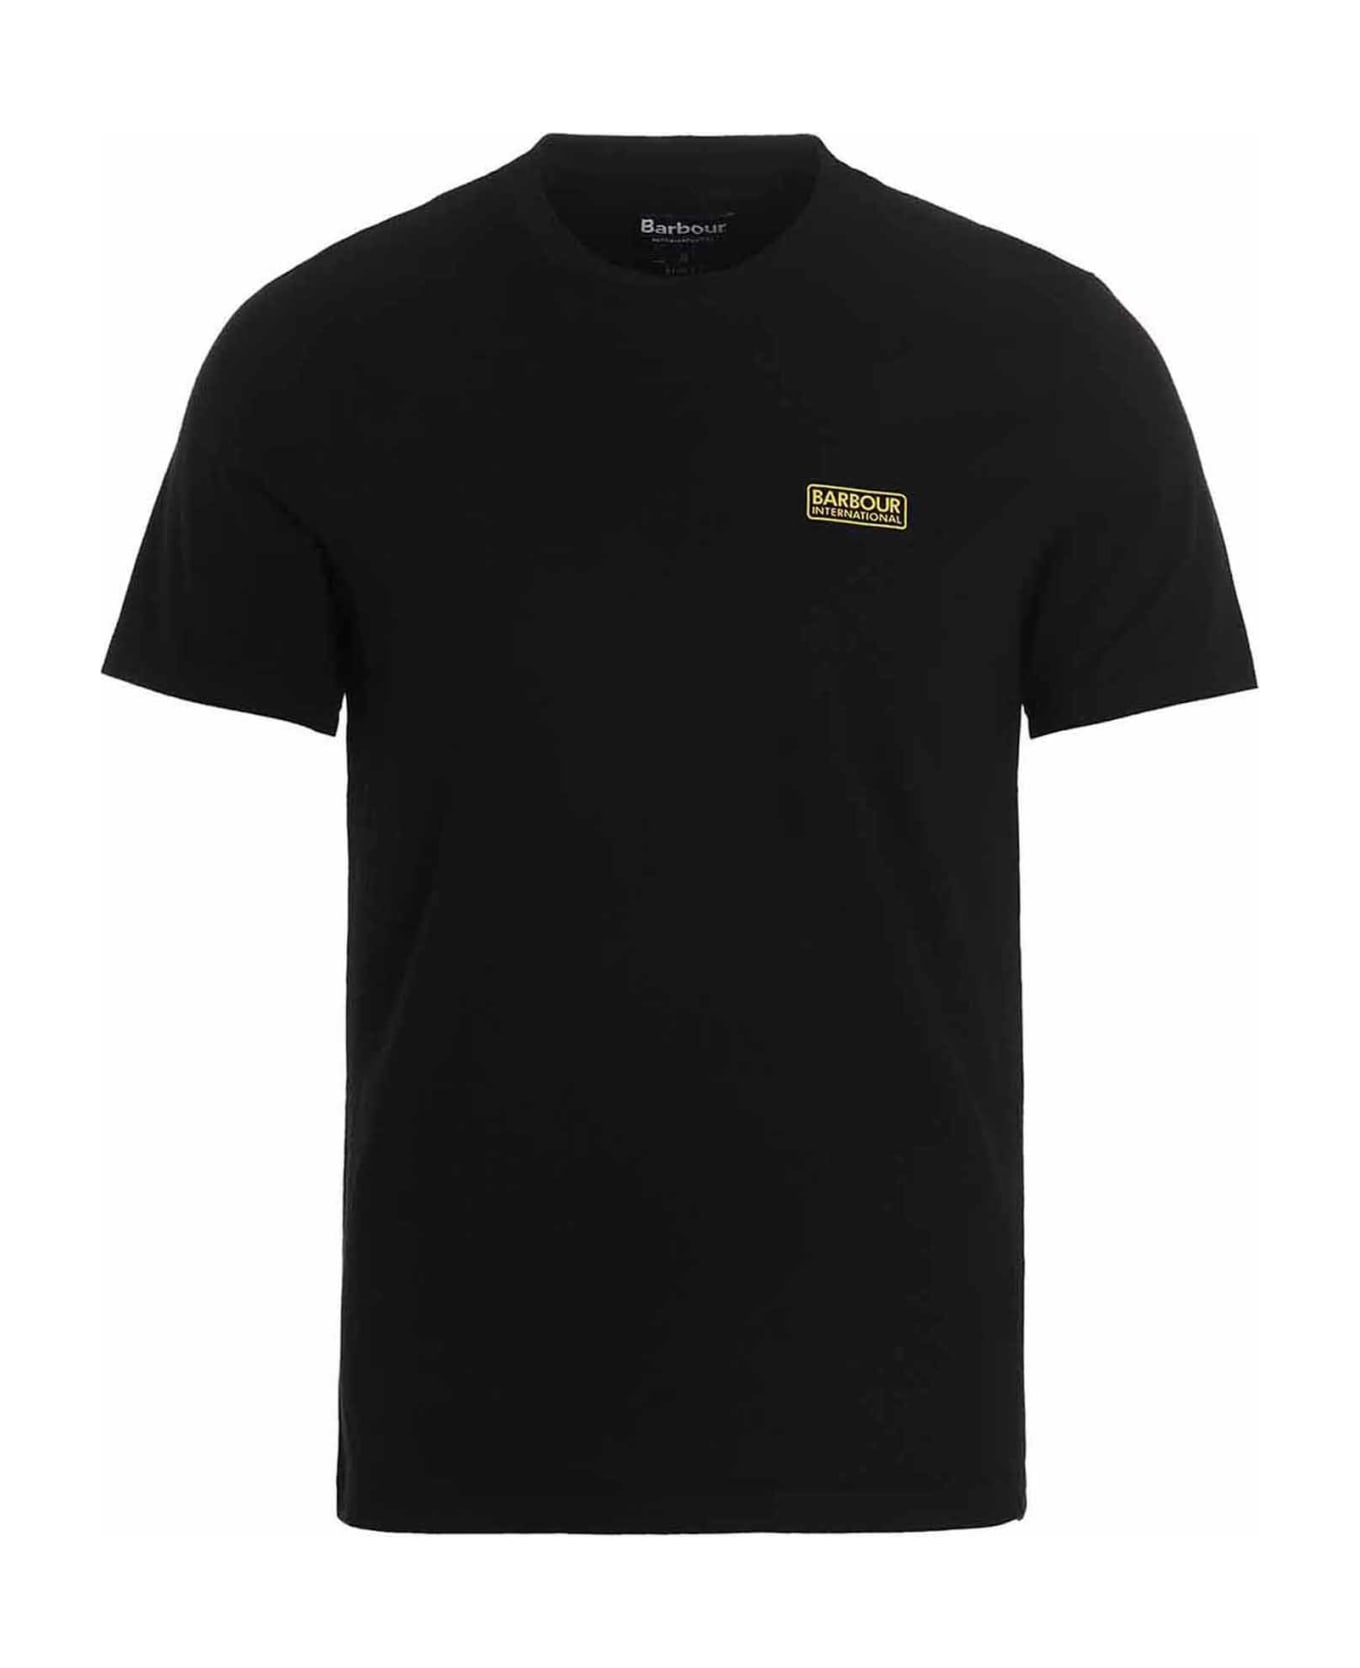 Barbour 'international T-shirt - Black/yellow